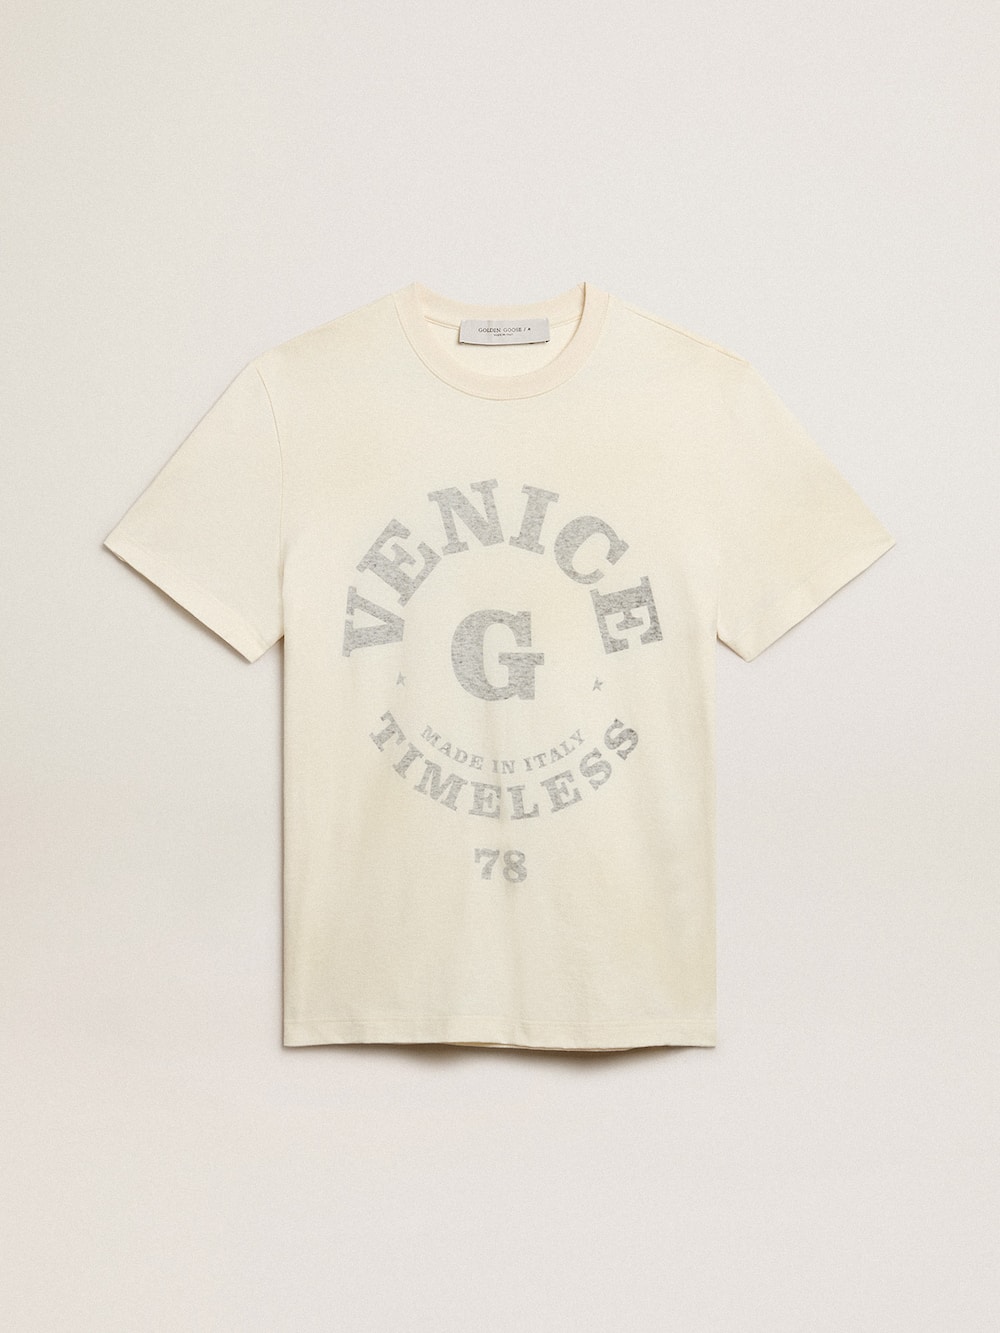 Golden Goose - Camiseta masculina de algodão branco usado e escrita desbotada  in 